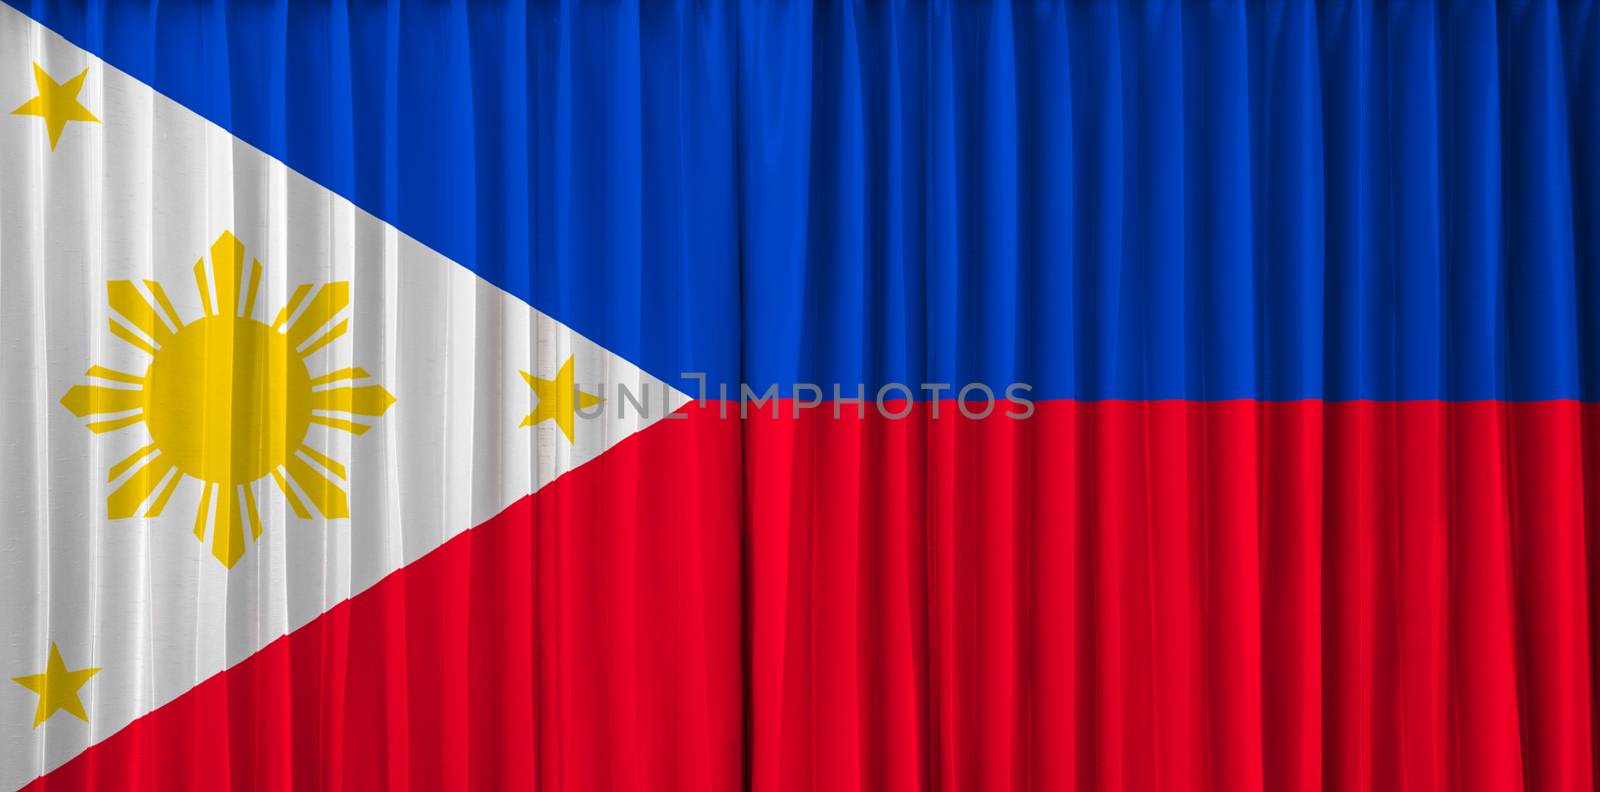 Phillippines flag on curtain by FrameAngel